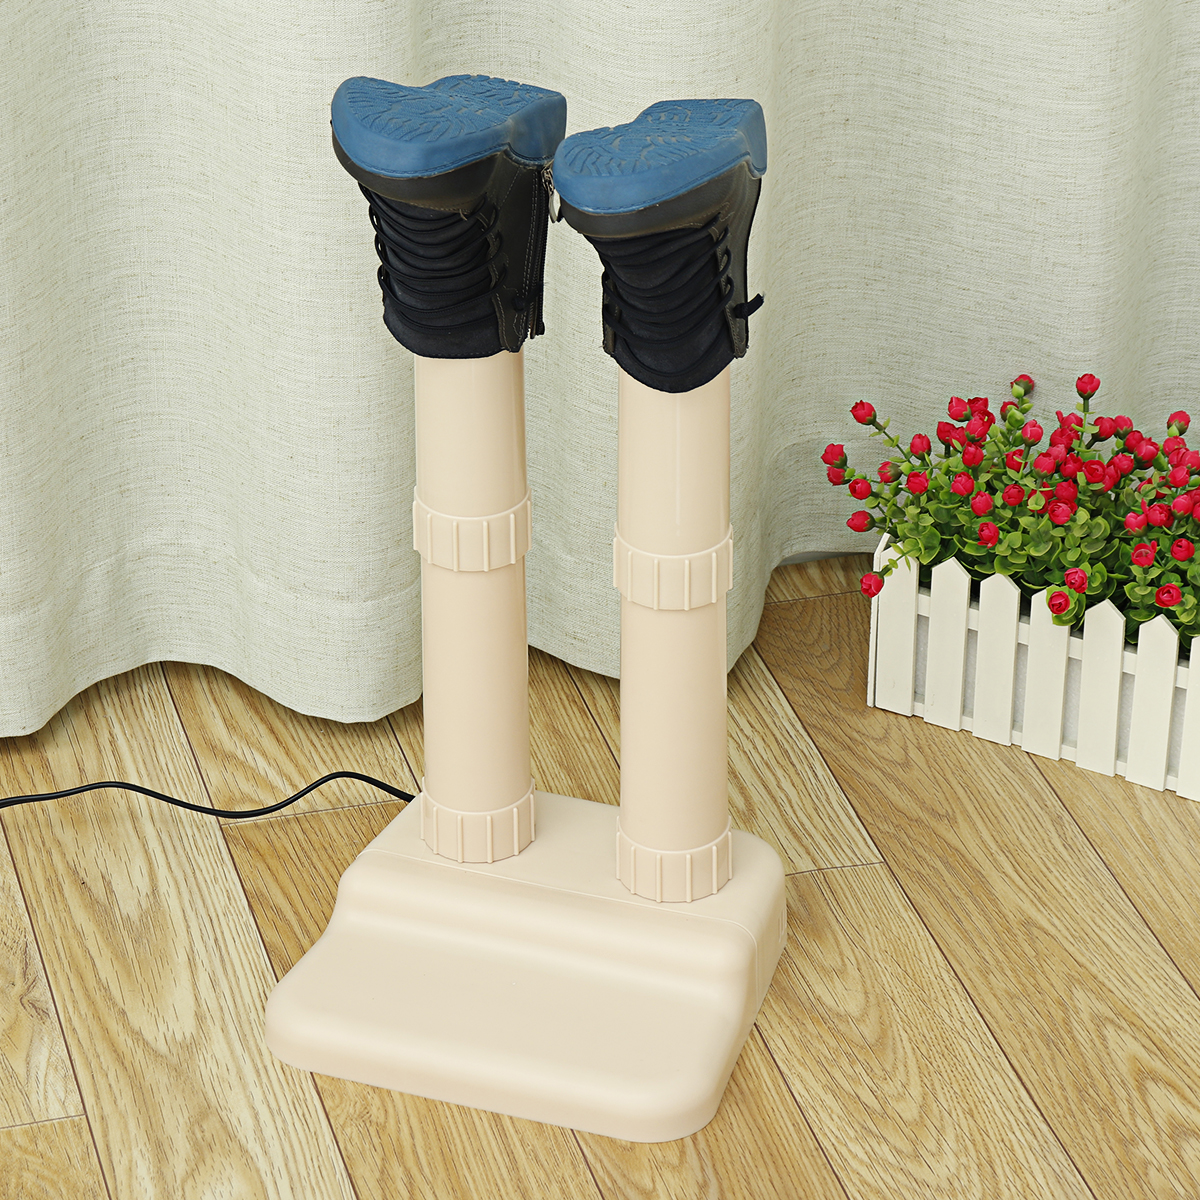 110V/220V Electric Shoe Dryer Mighty Boot Warmer Glove Dryer Prevent Odor Mold & Bacteria